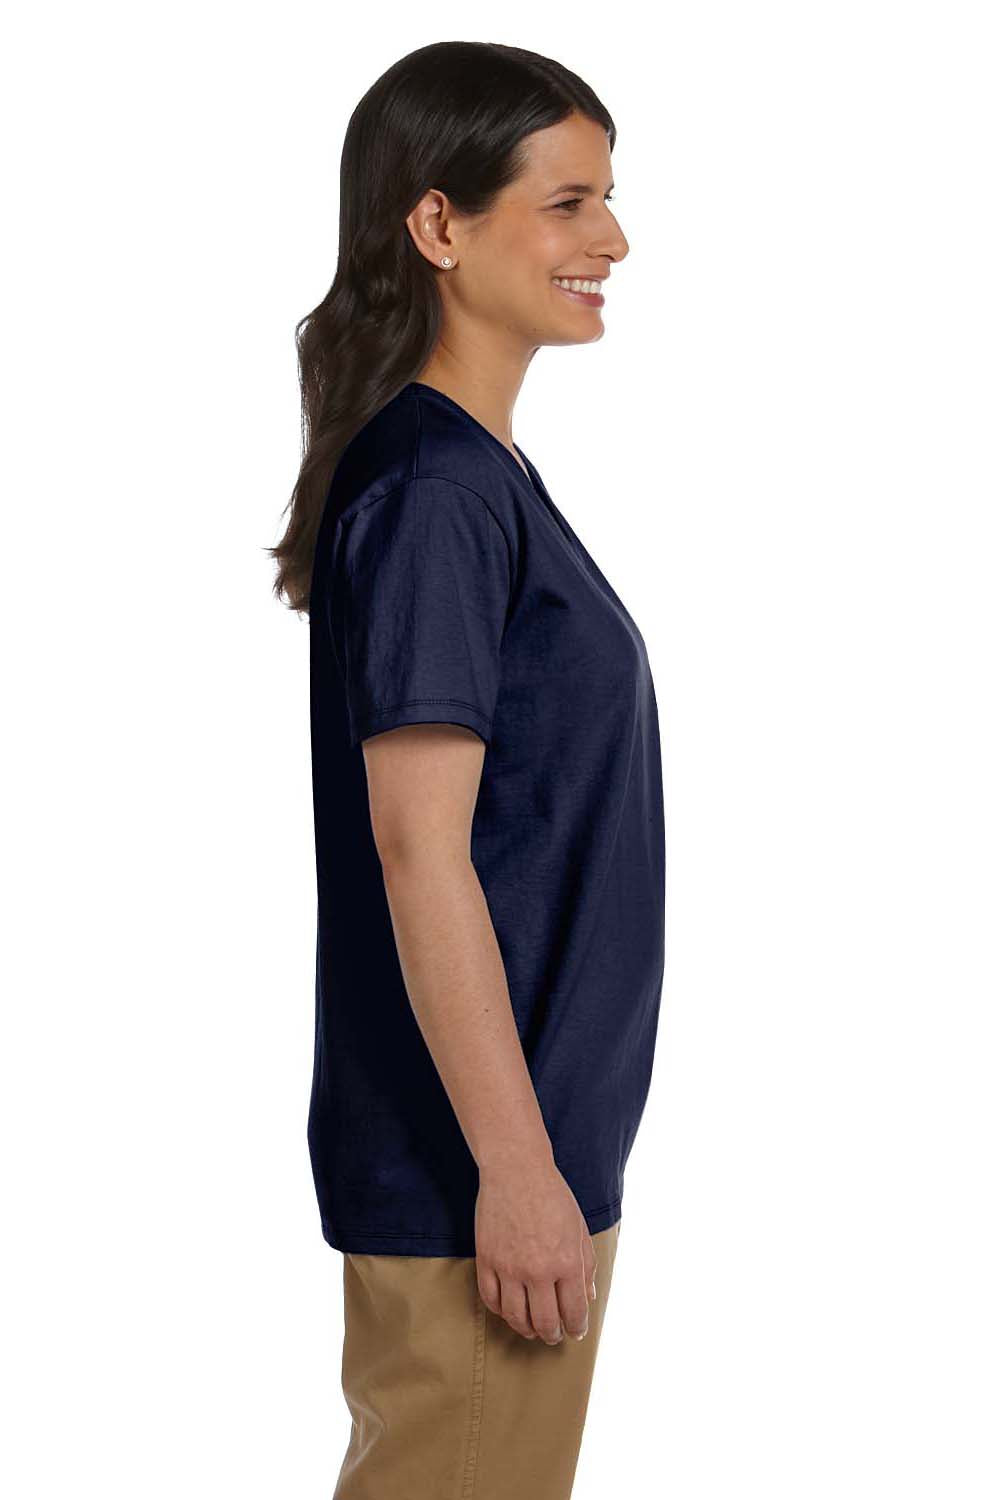 Hanes 5780 Womens ComfortSoft Short Sleeve V-Neck T-Shirt Navy Blue Side